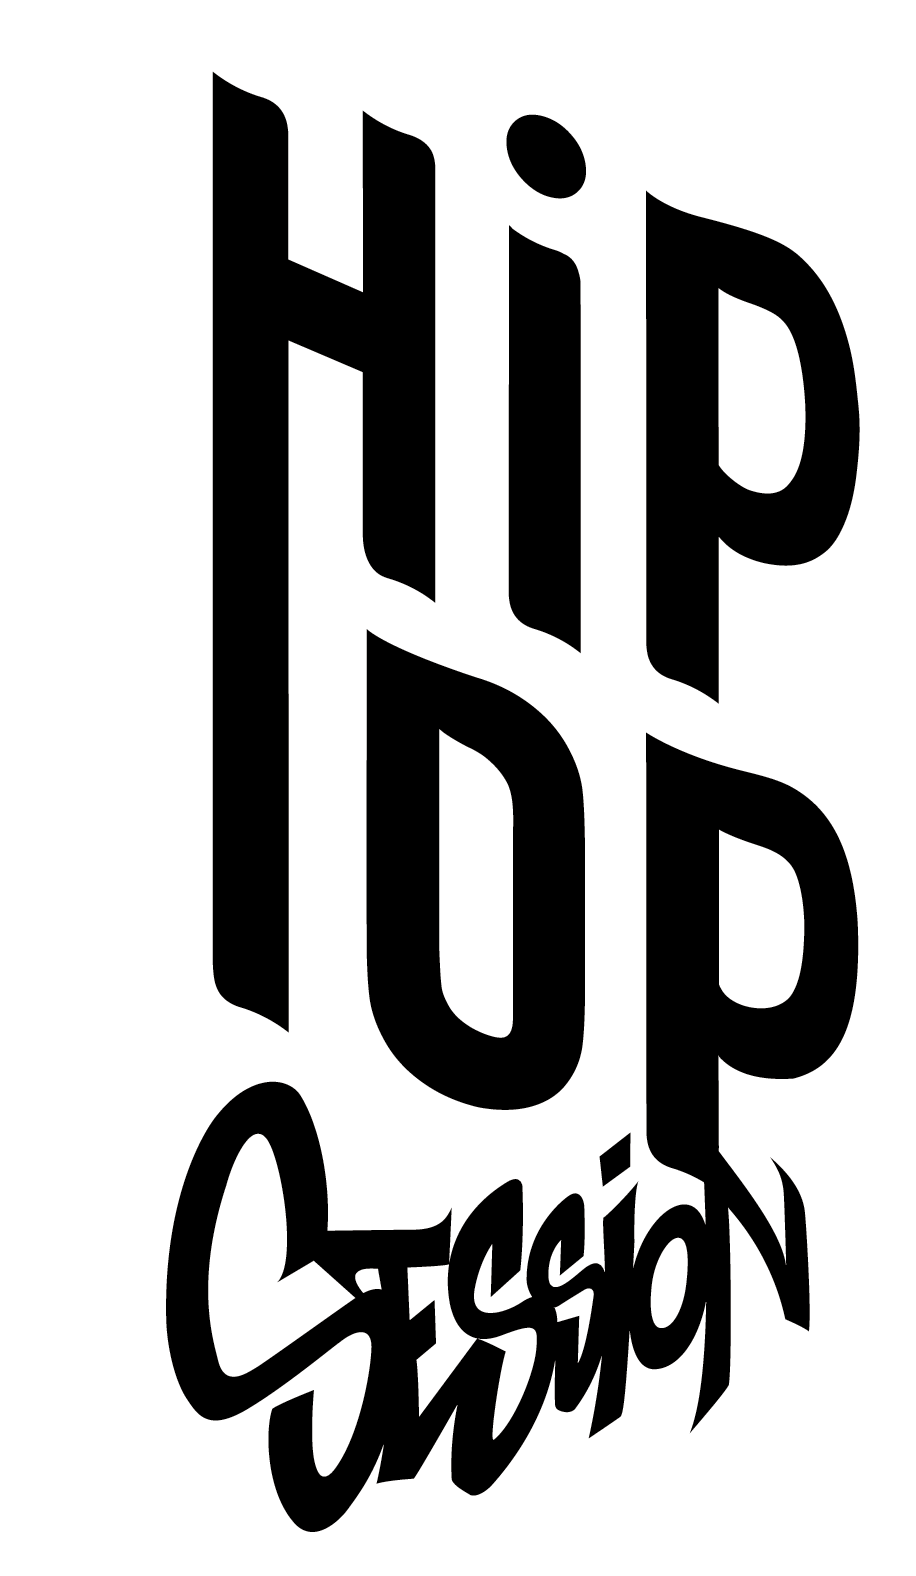 Logo HIP OPsession